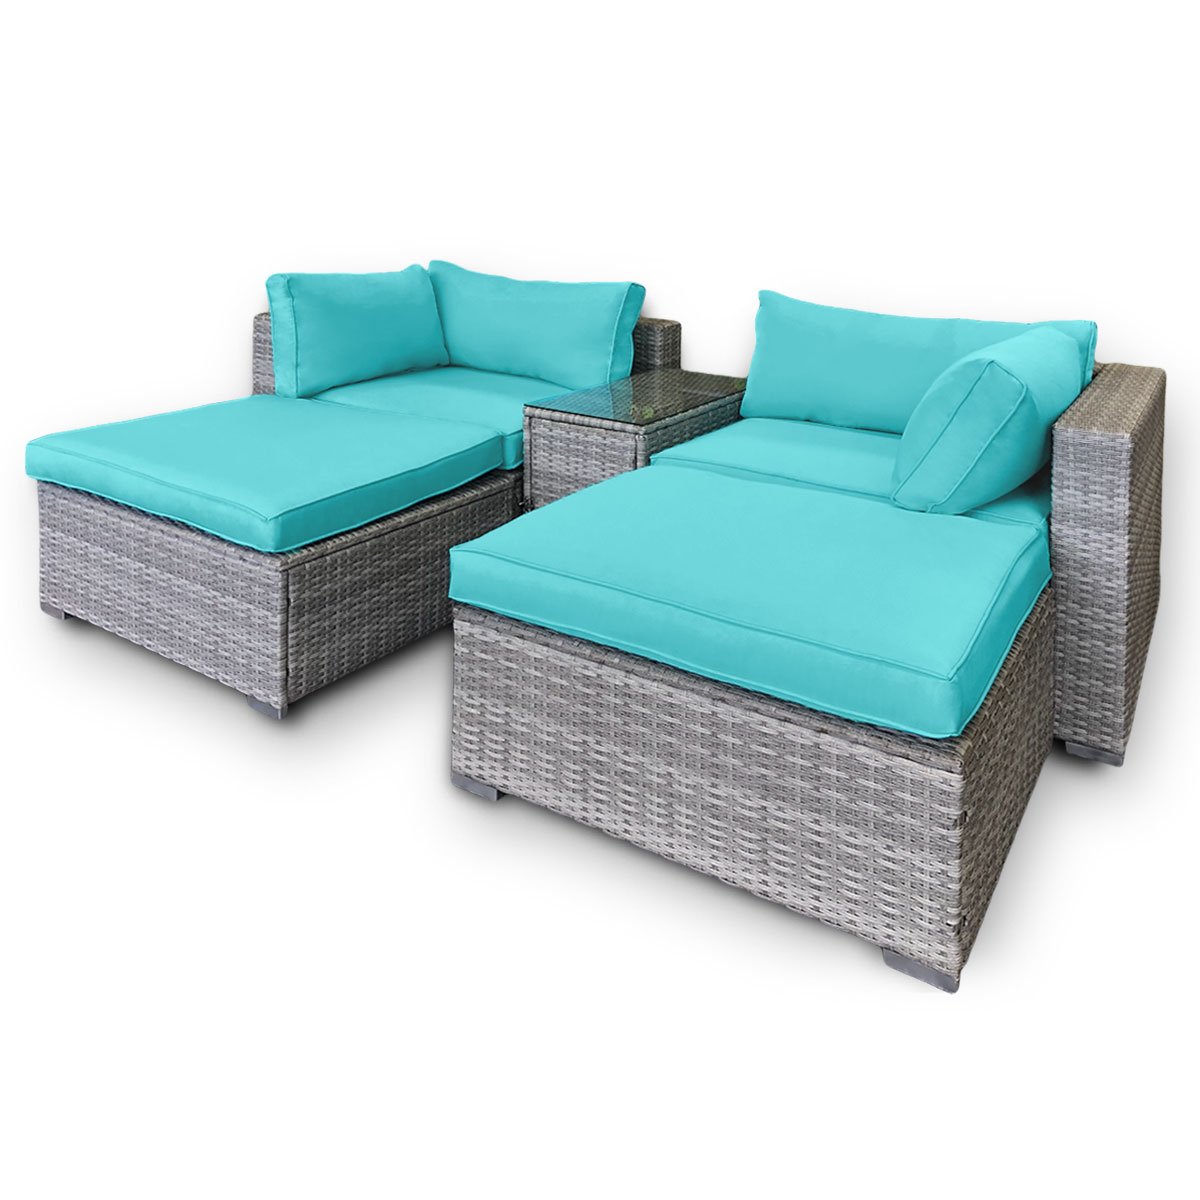 Rattan Outdoor 5pc Corner Chairs Ottoman Furniture Lounge - Aqua 2